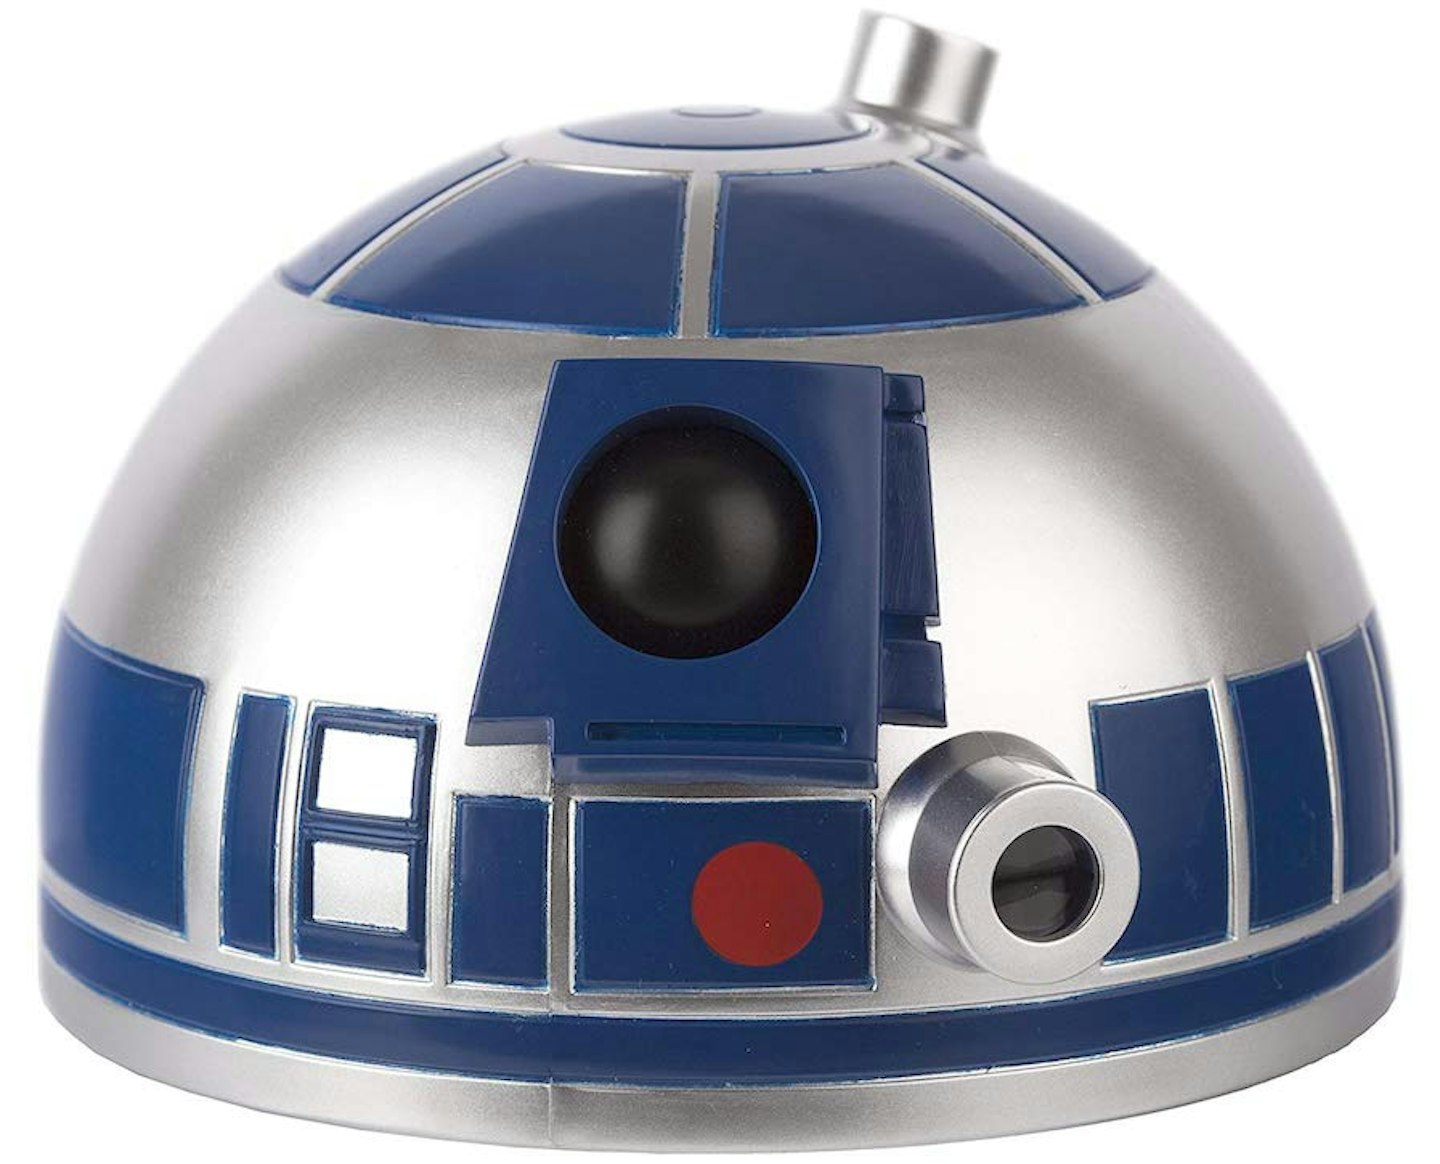 Star Wars R2-D2 Projection Clock, £20.99